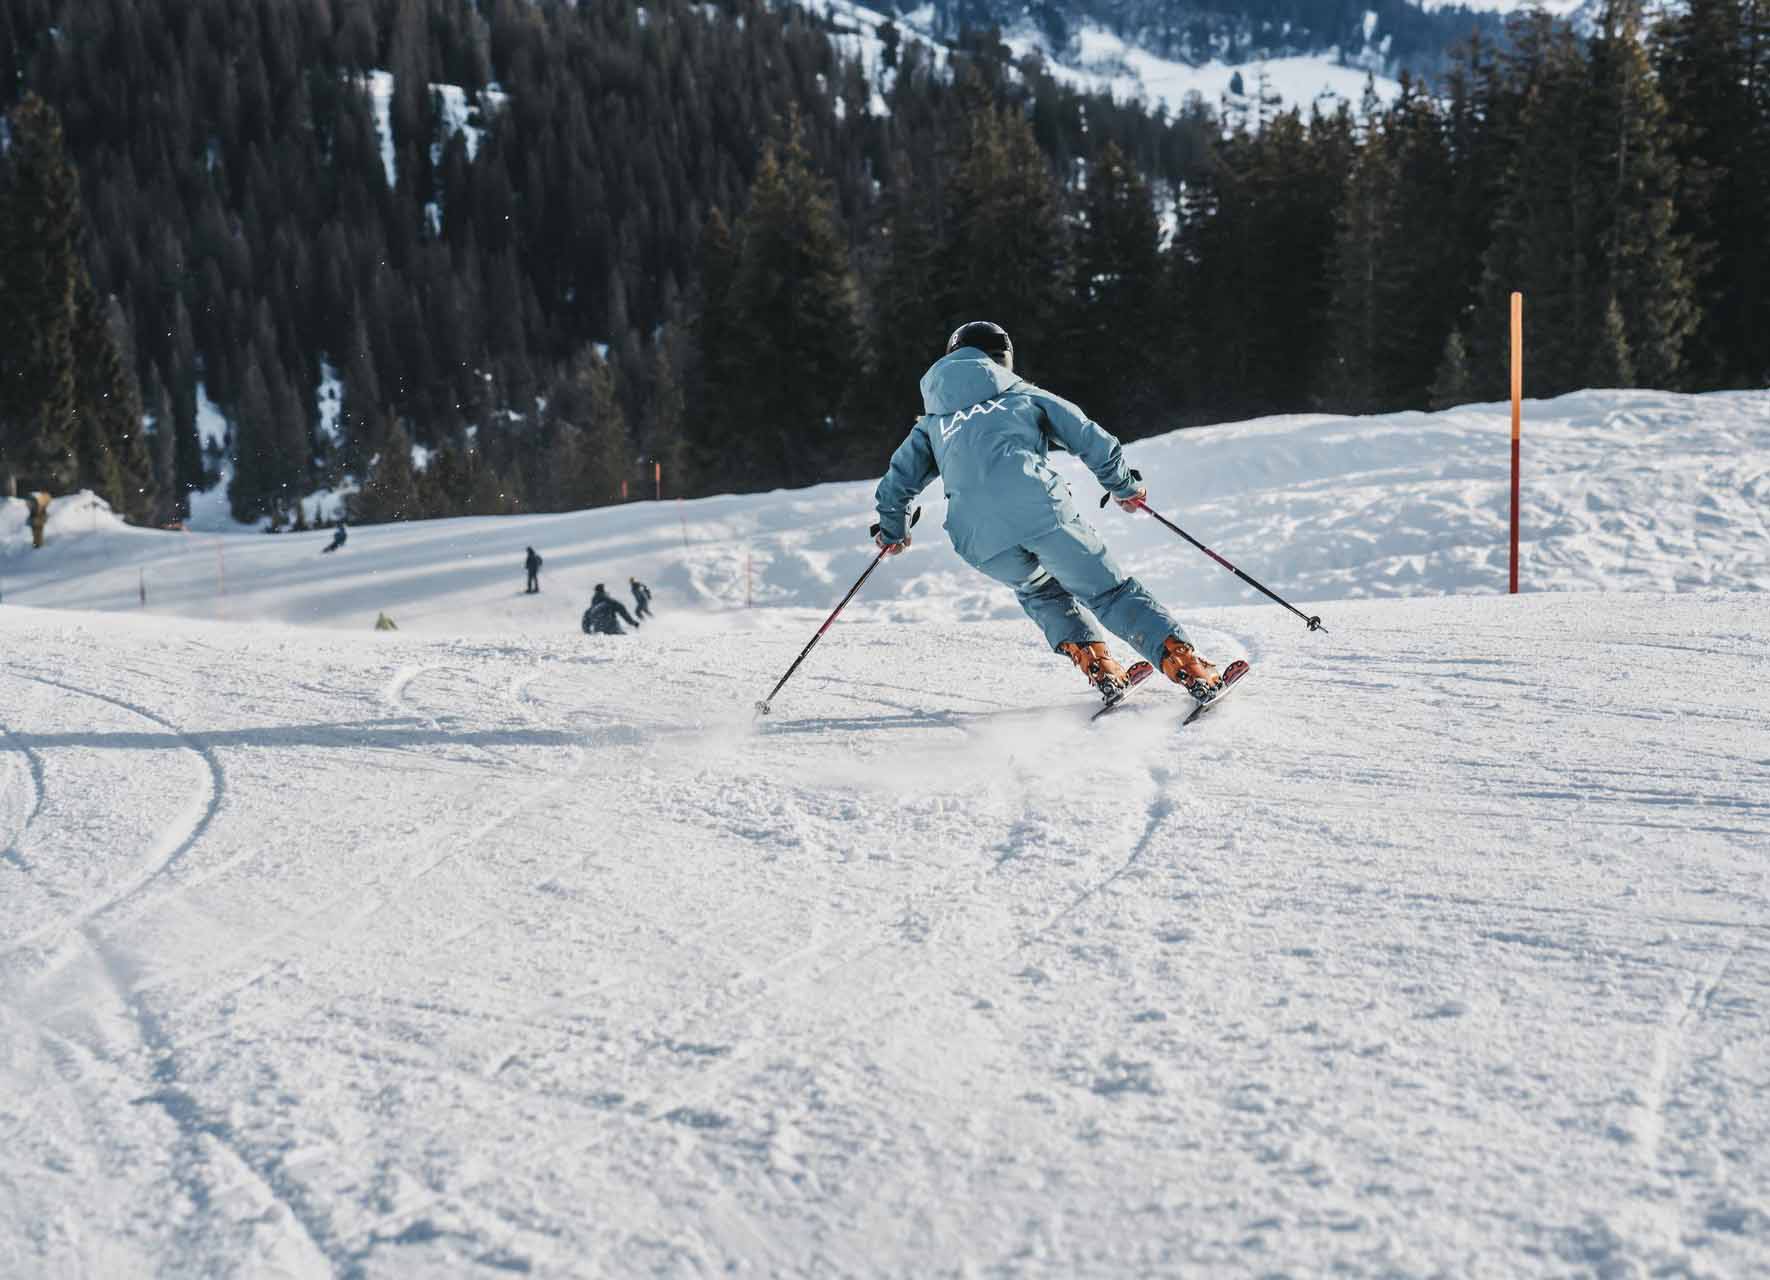 Skikurse, Fortgeschrittene, Flims, Laax, Schweiz, Ski fahren lernen